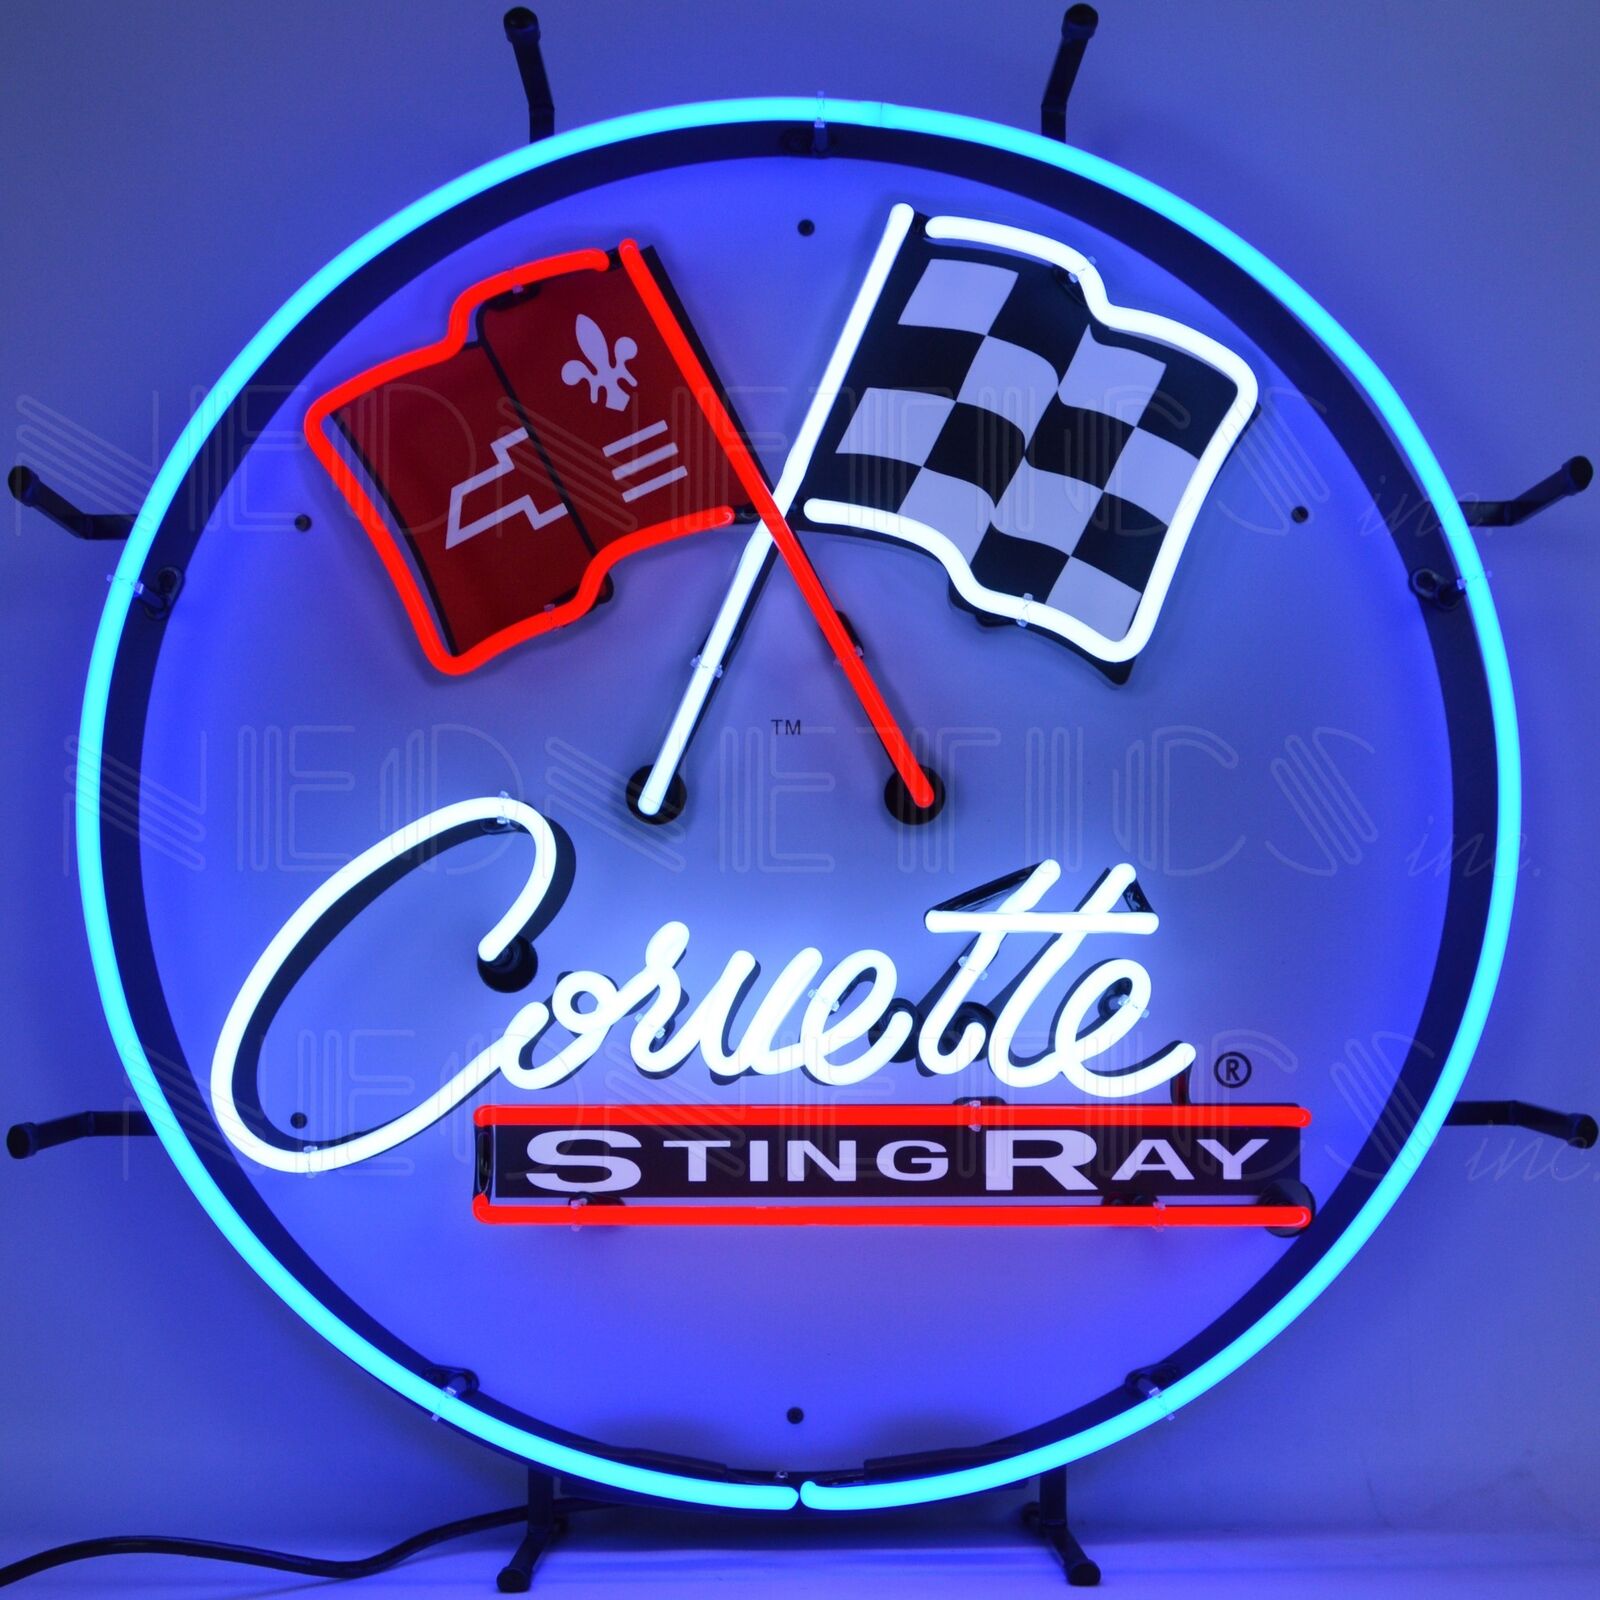 Corvette C2 Stingray Round Sign Auto Garage Banner Neon Light Sign 24